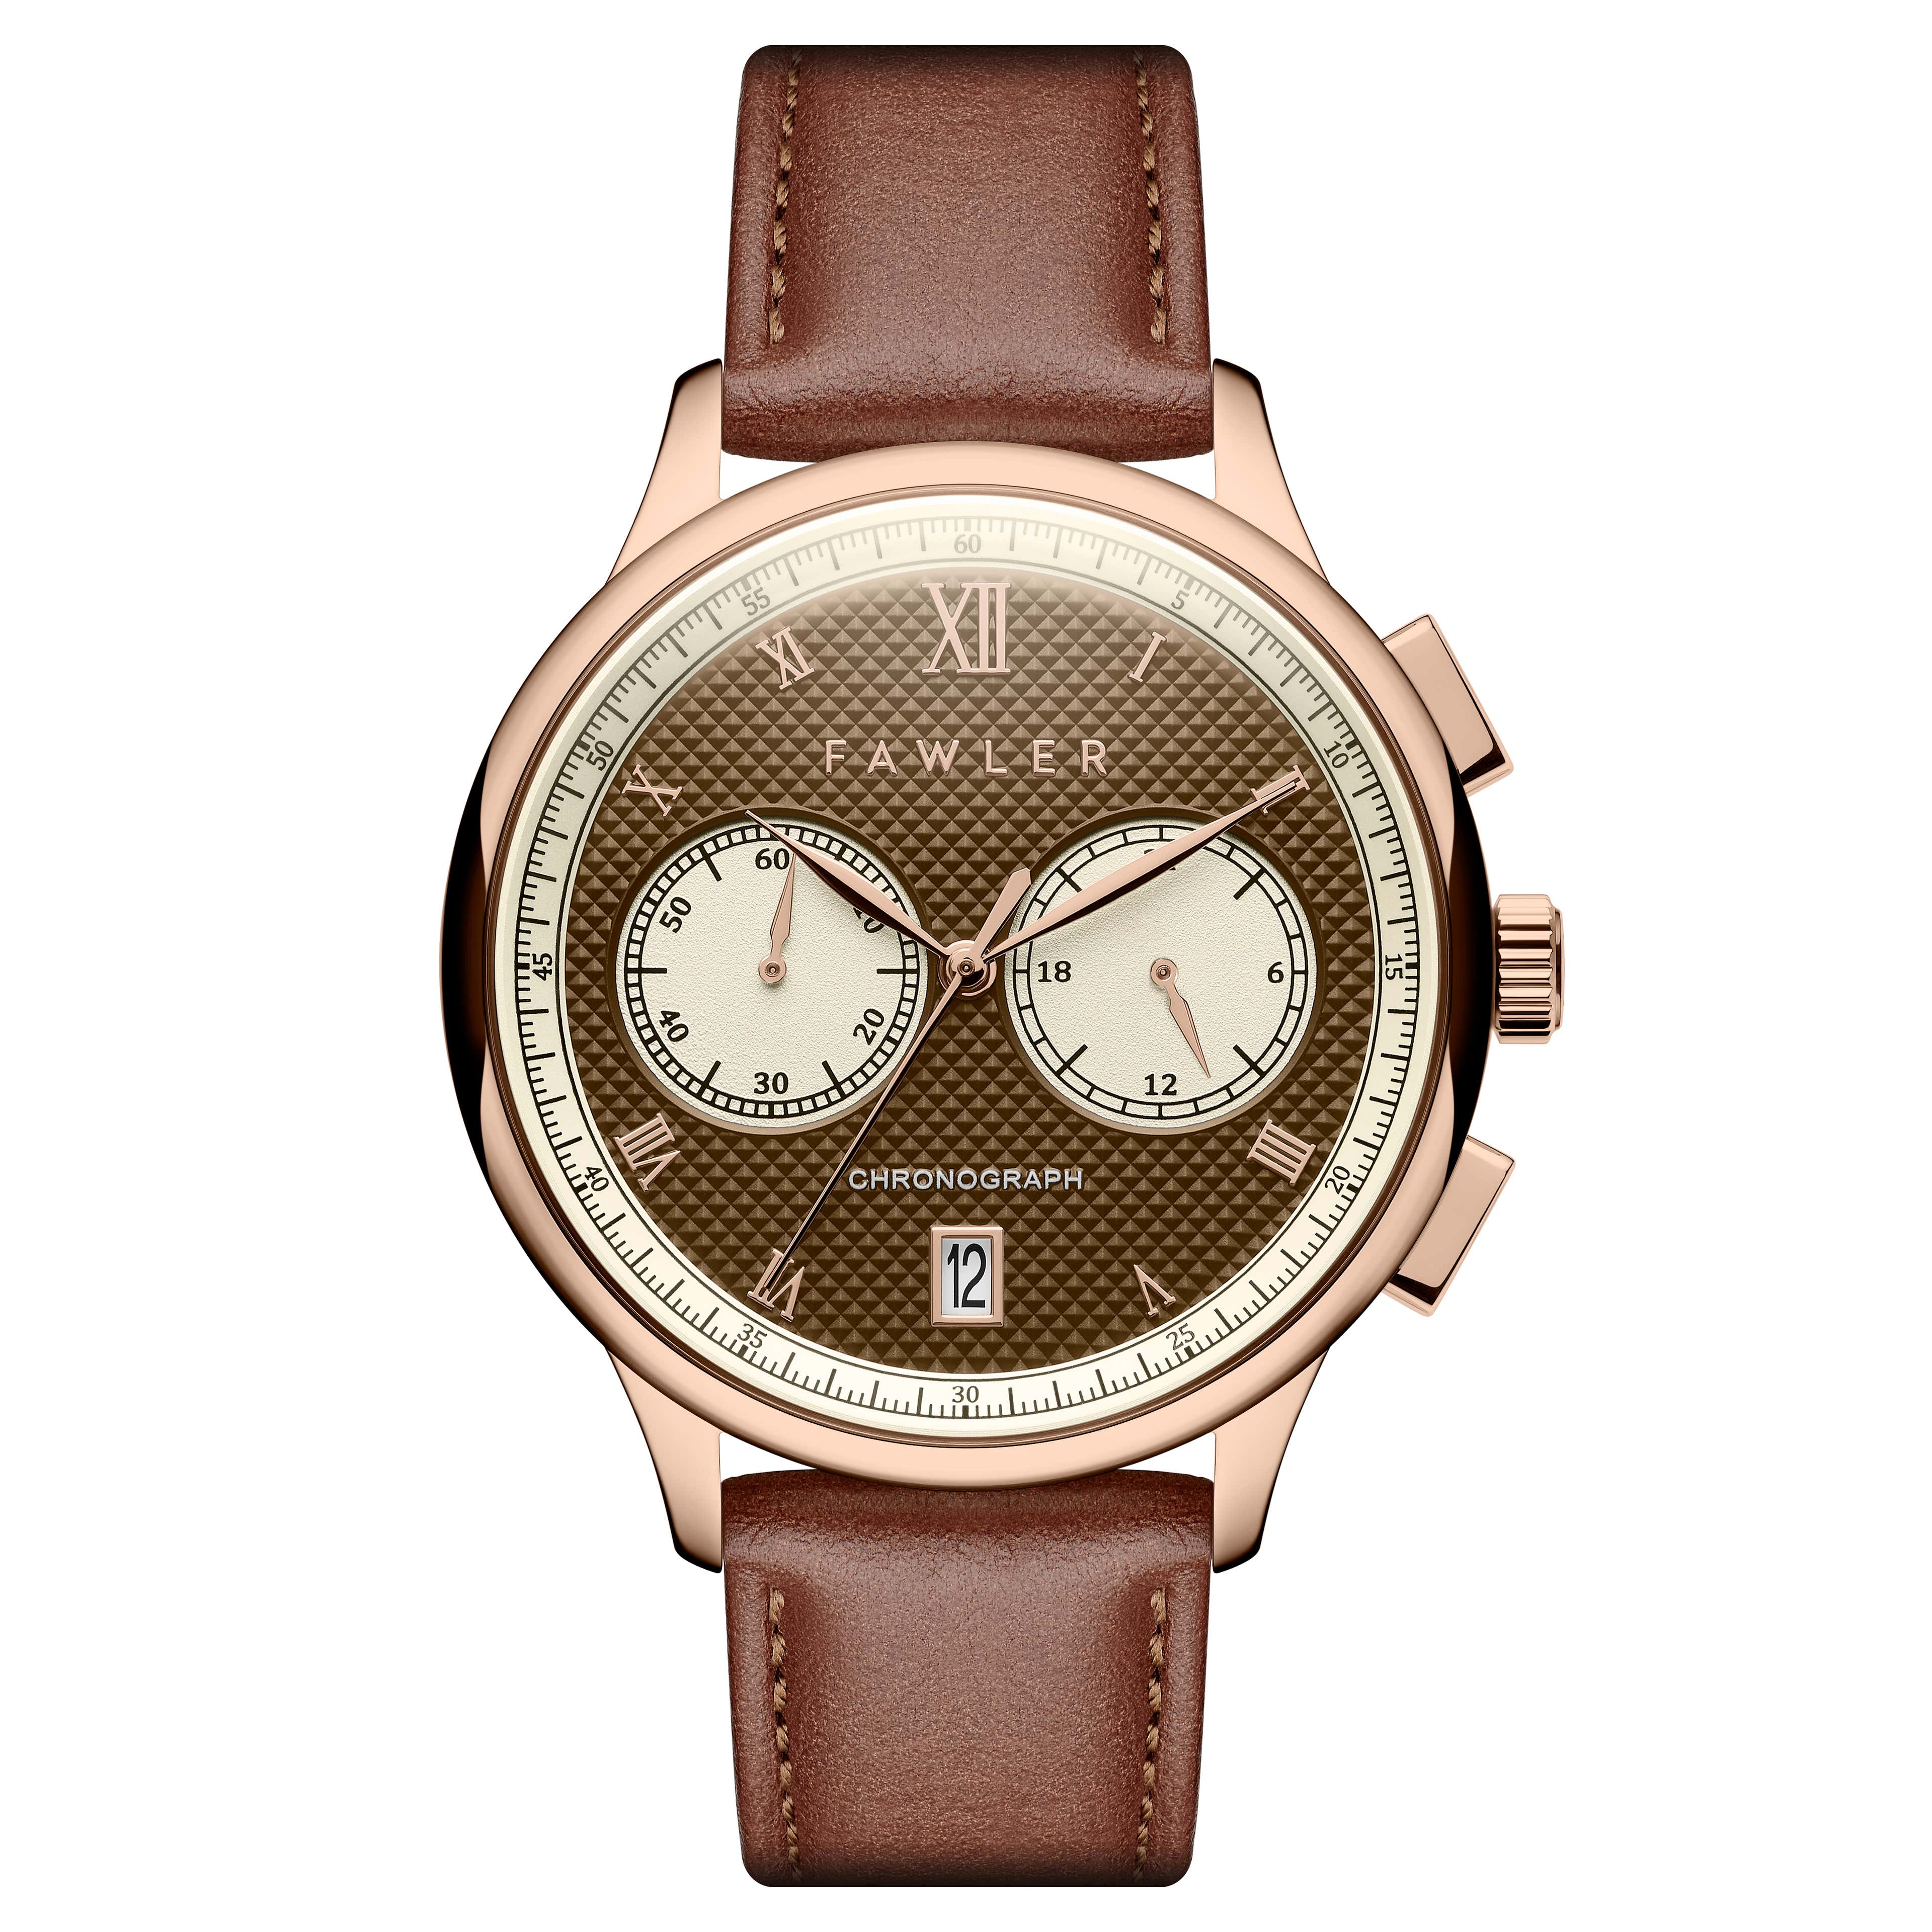 Cicero | Limitovaná edice vintage hodinky s chronografem v růžově zlaté barvě